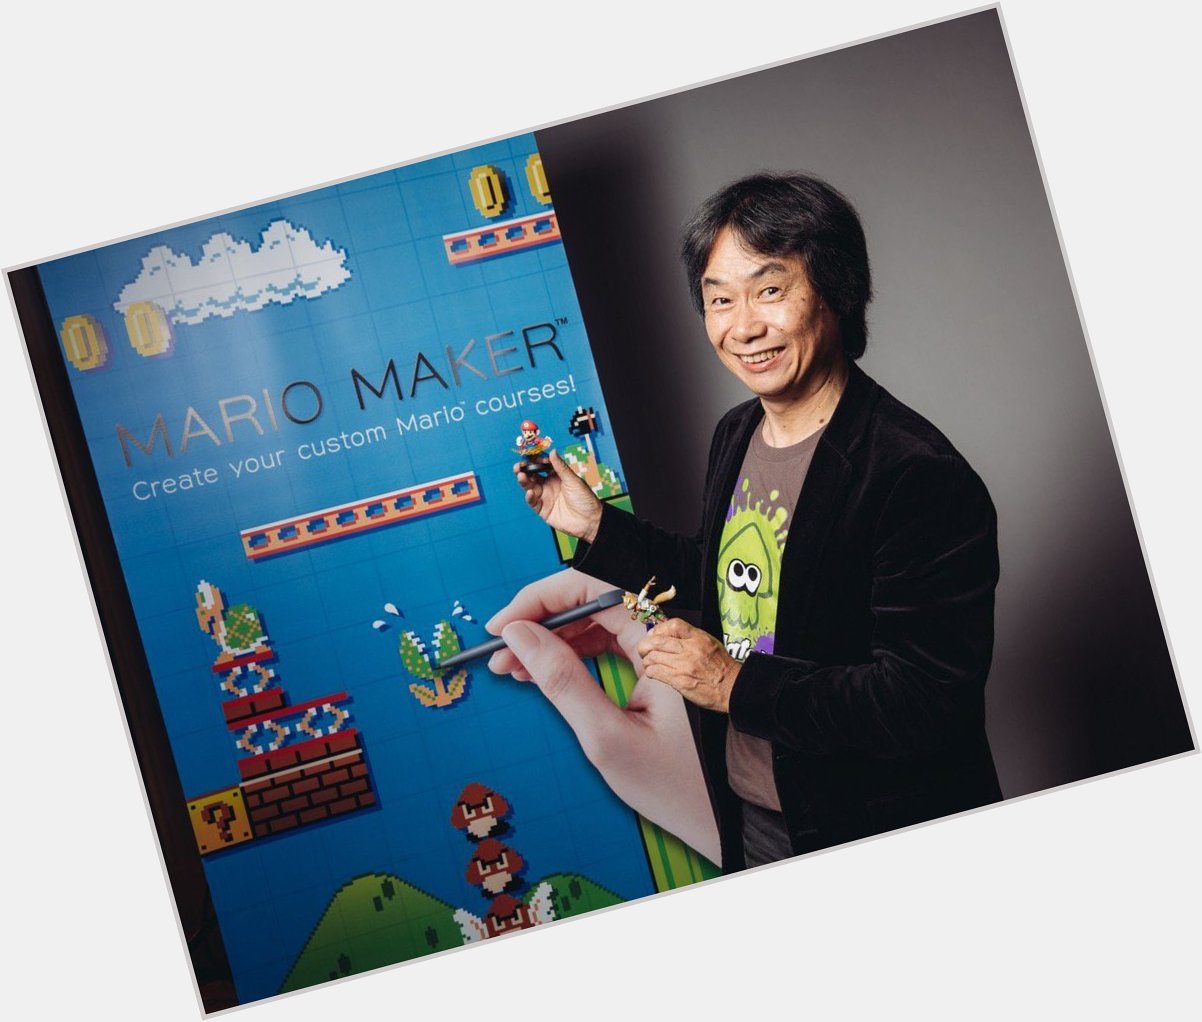 I want to wish Shigeru Miyamoto a really happy birthday! 